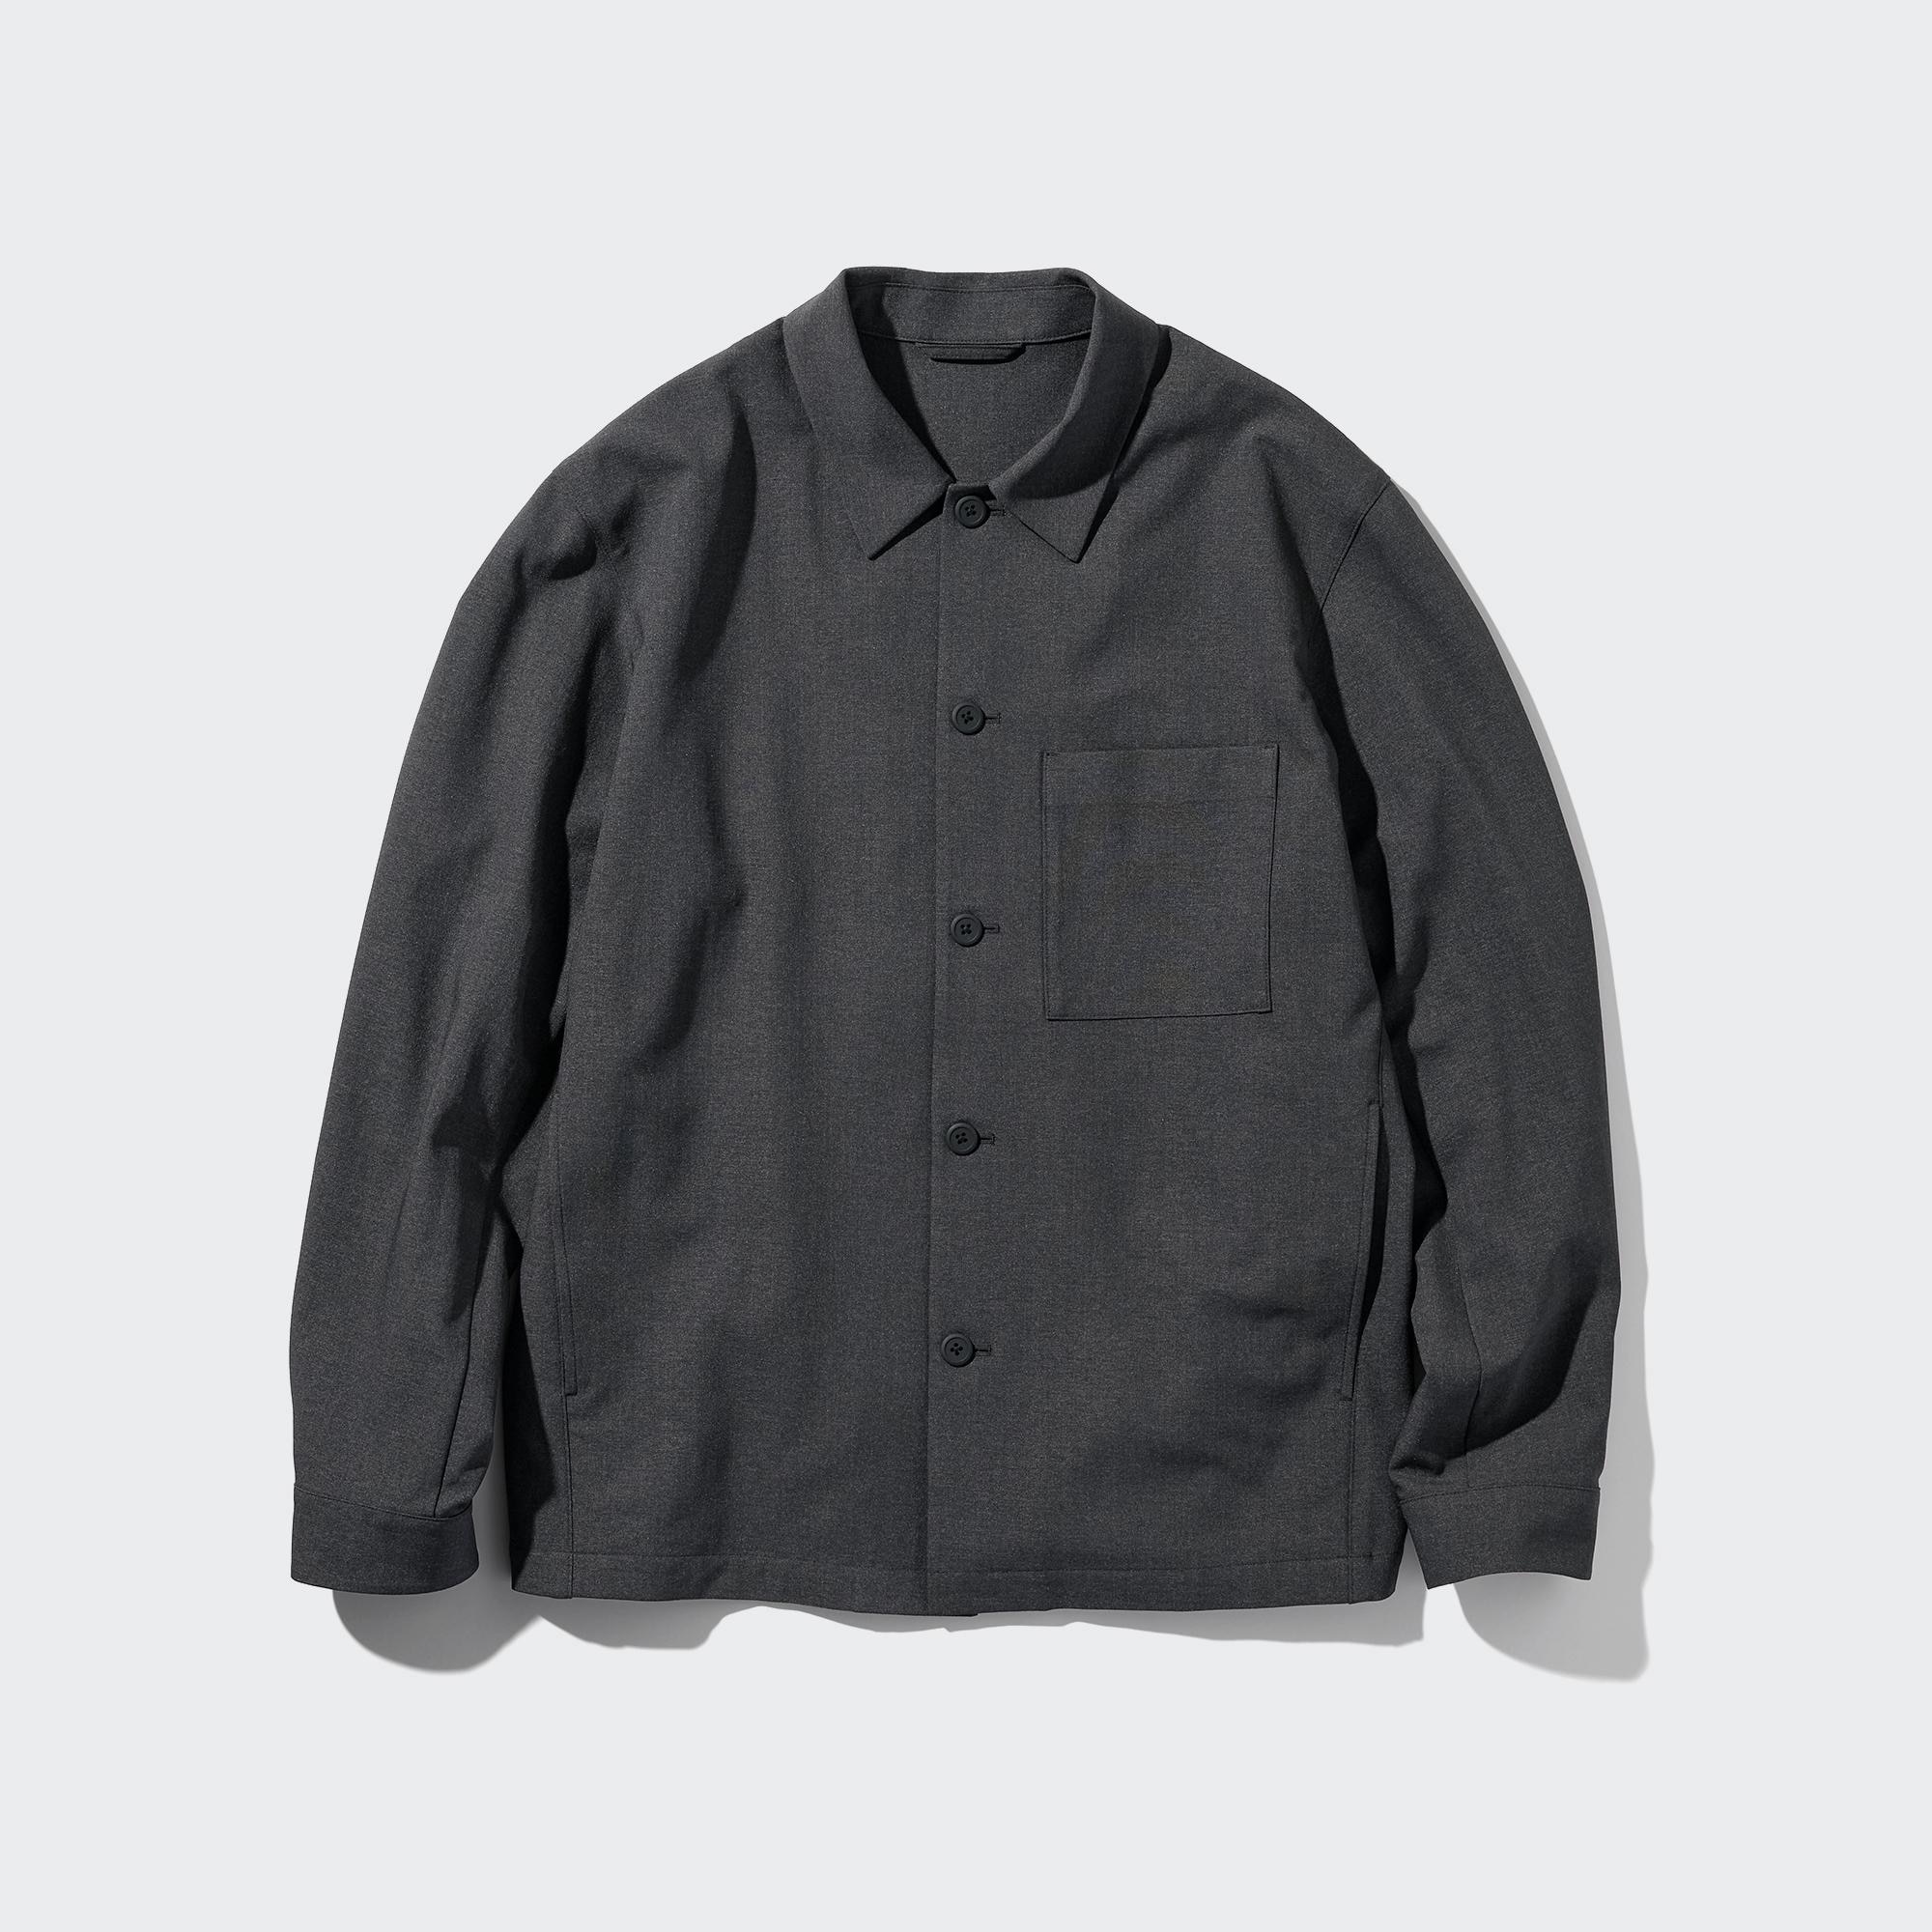 AirSense Shirt Jacket (Wool-Like)